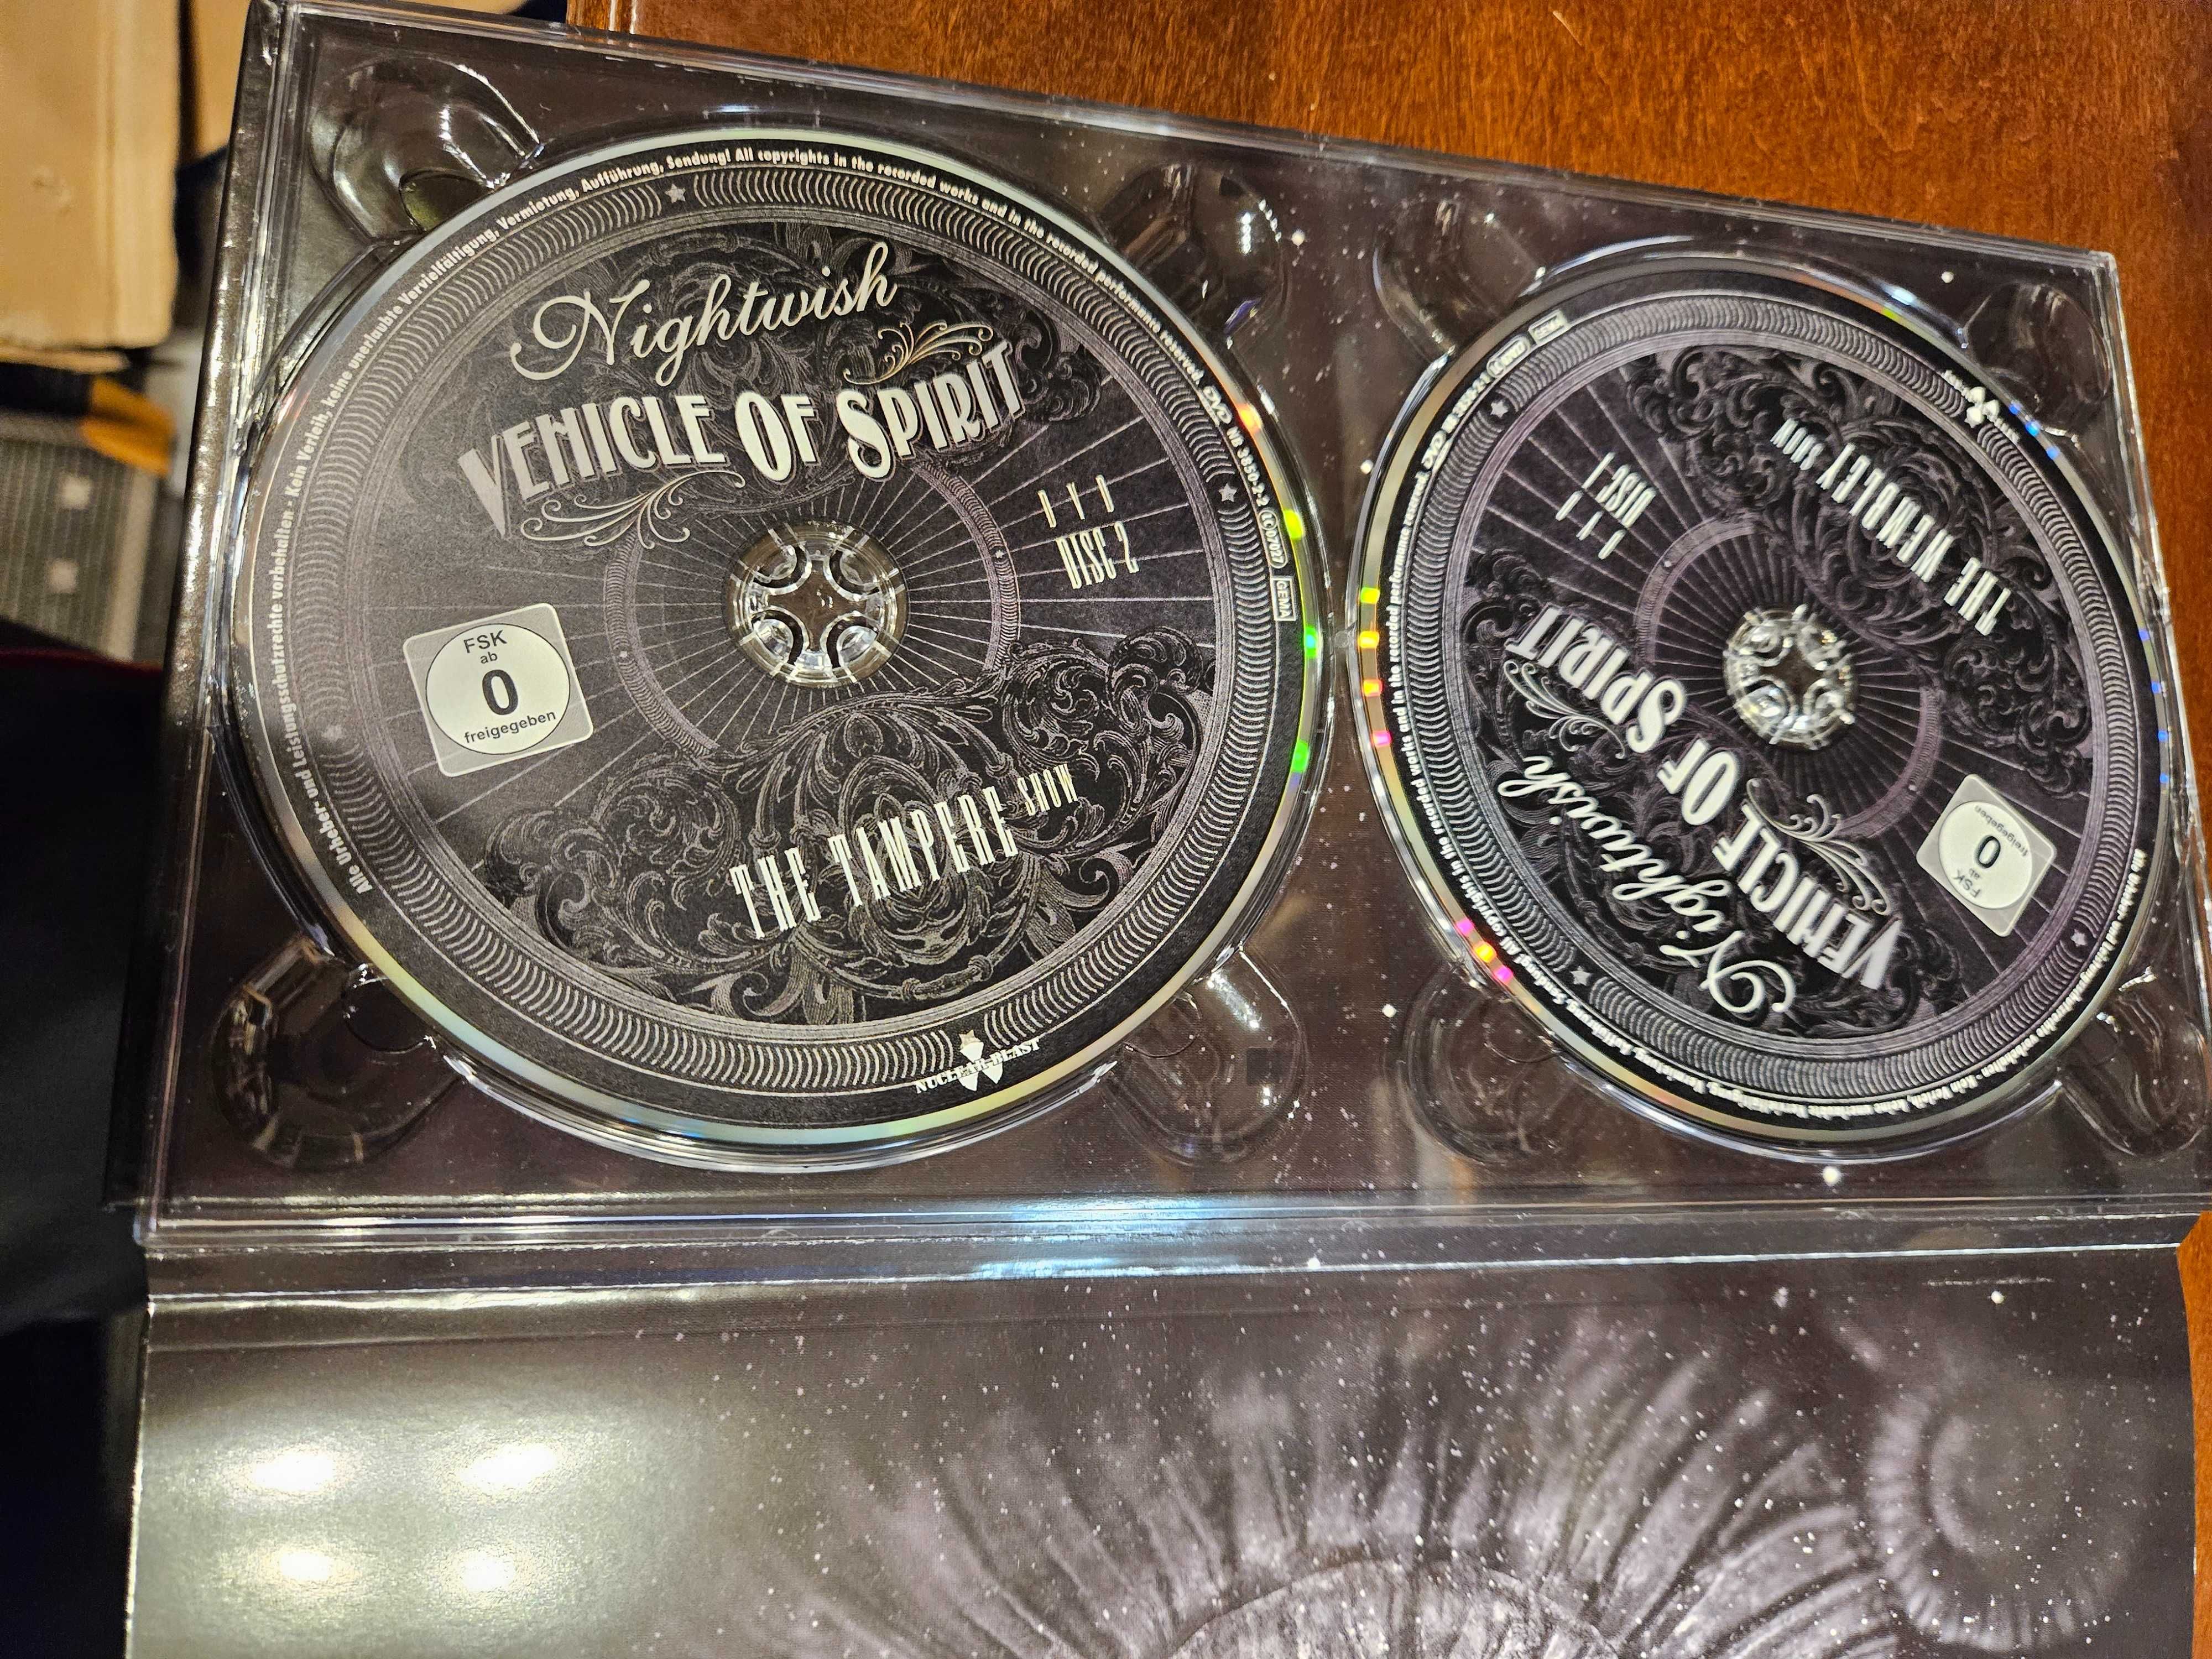 DVD Nightwish Vehicle of spirit 3 x DVD